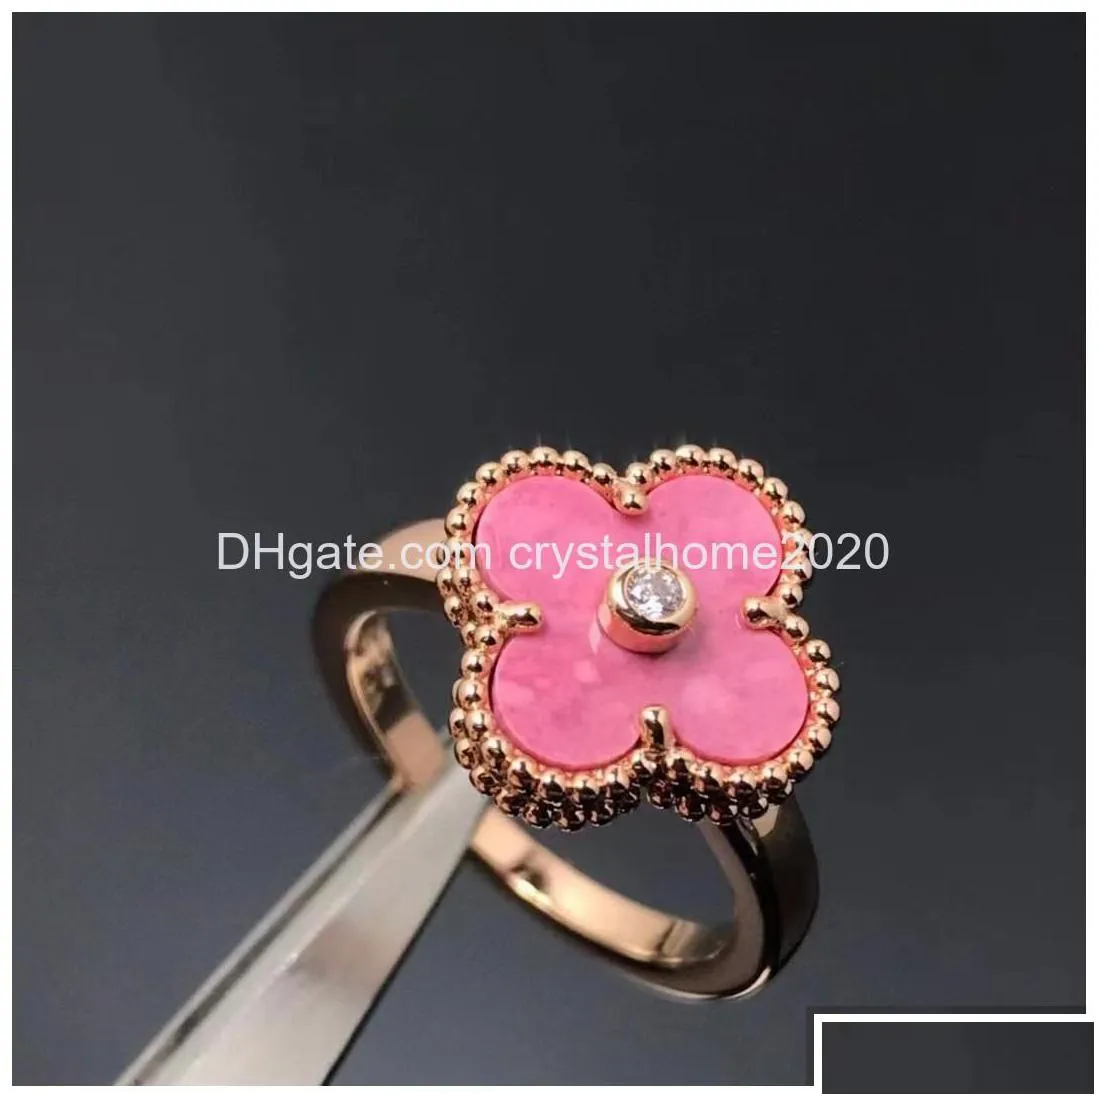 band rings brand luxury clover designer for women girls diamond crystal 18k rose gold sweet pink love nail ring party wedding jewelr